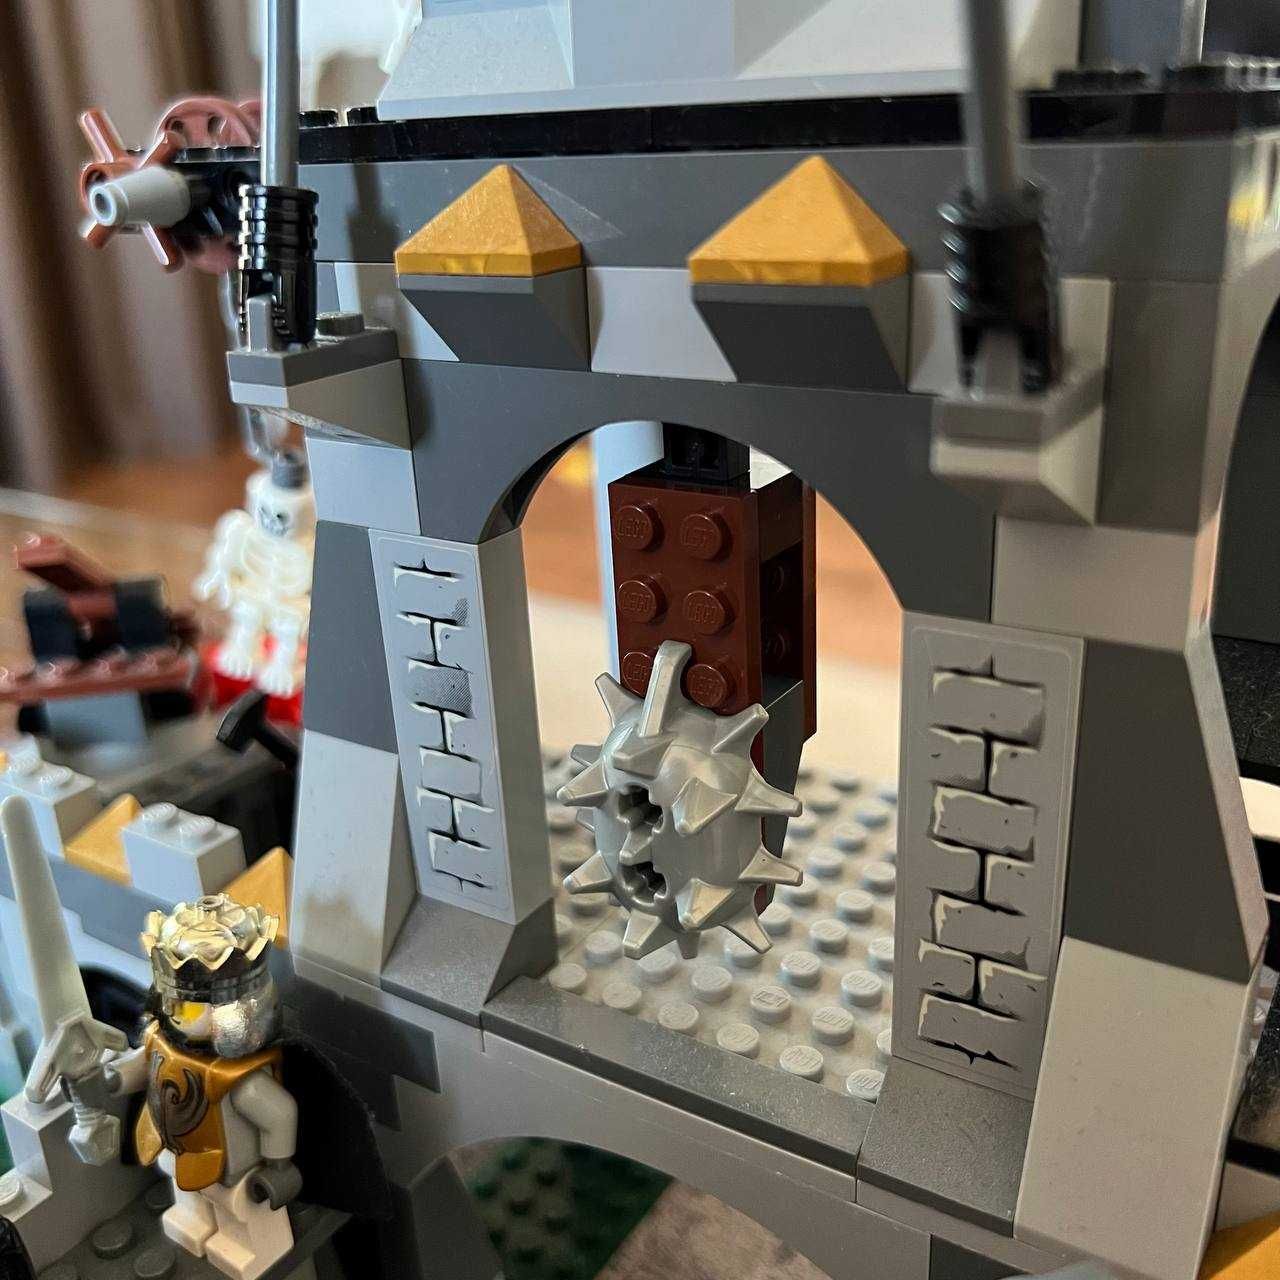 Lego Mistlands Tower 8823